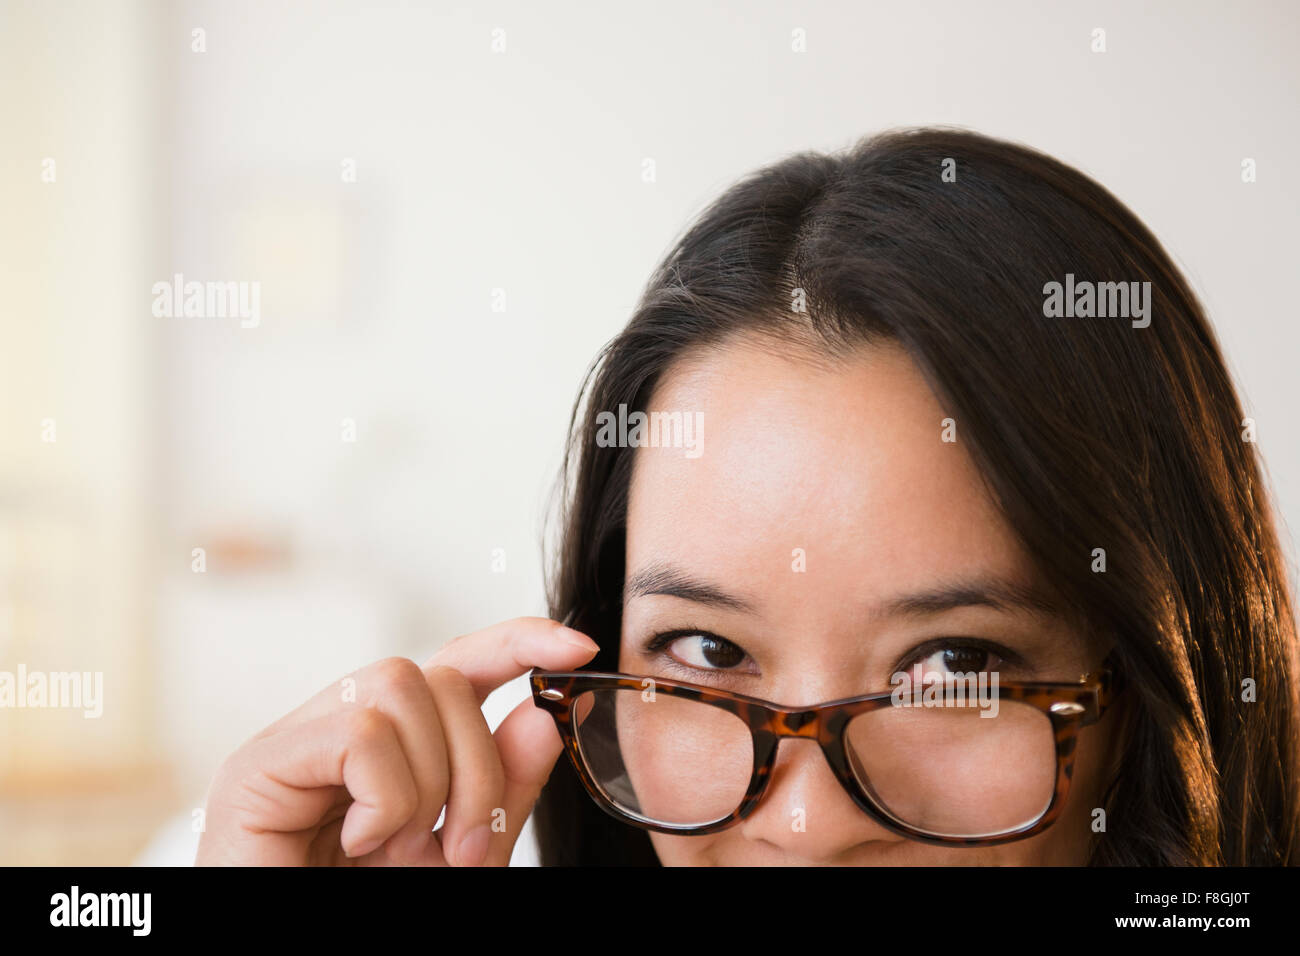 Chinese woman peering over eyeglasses Stock Photo